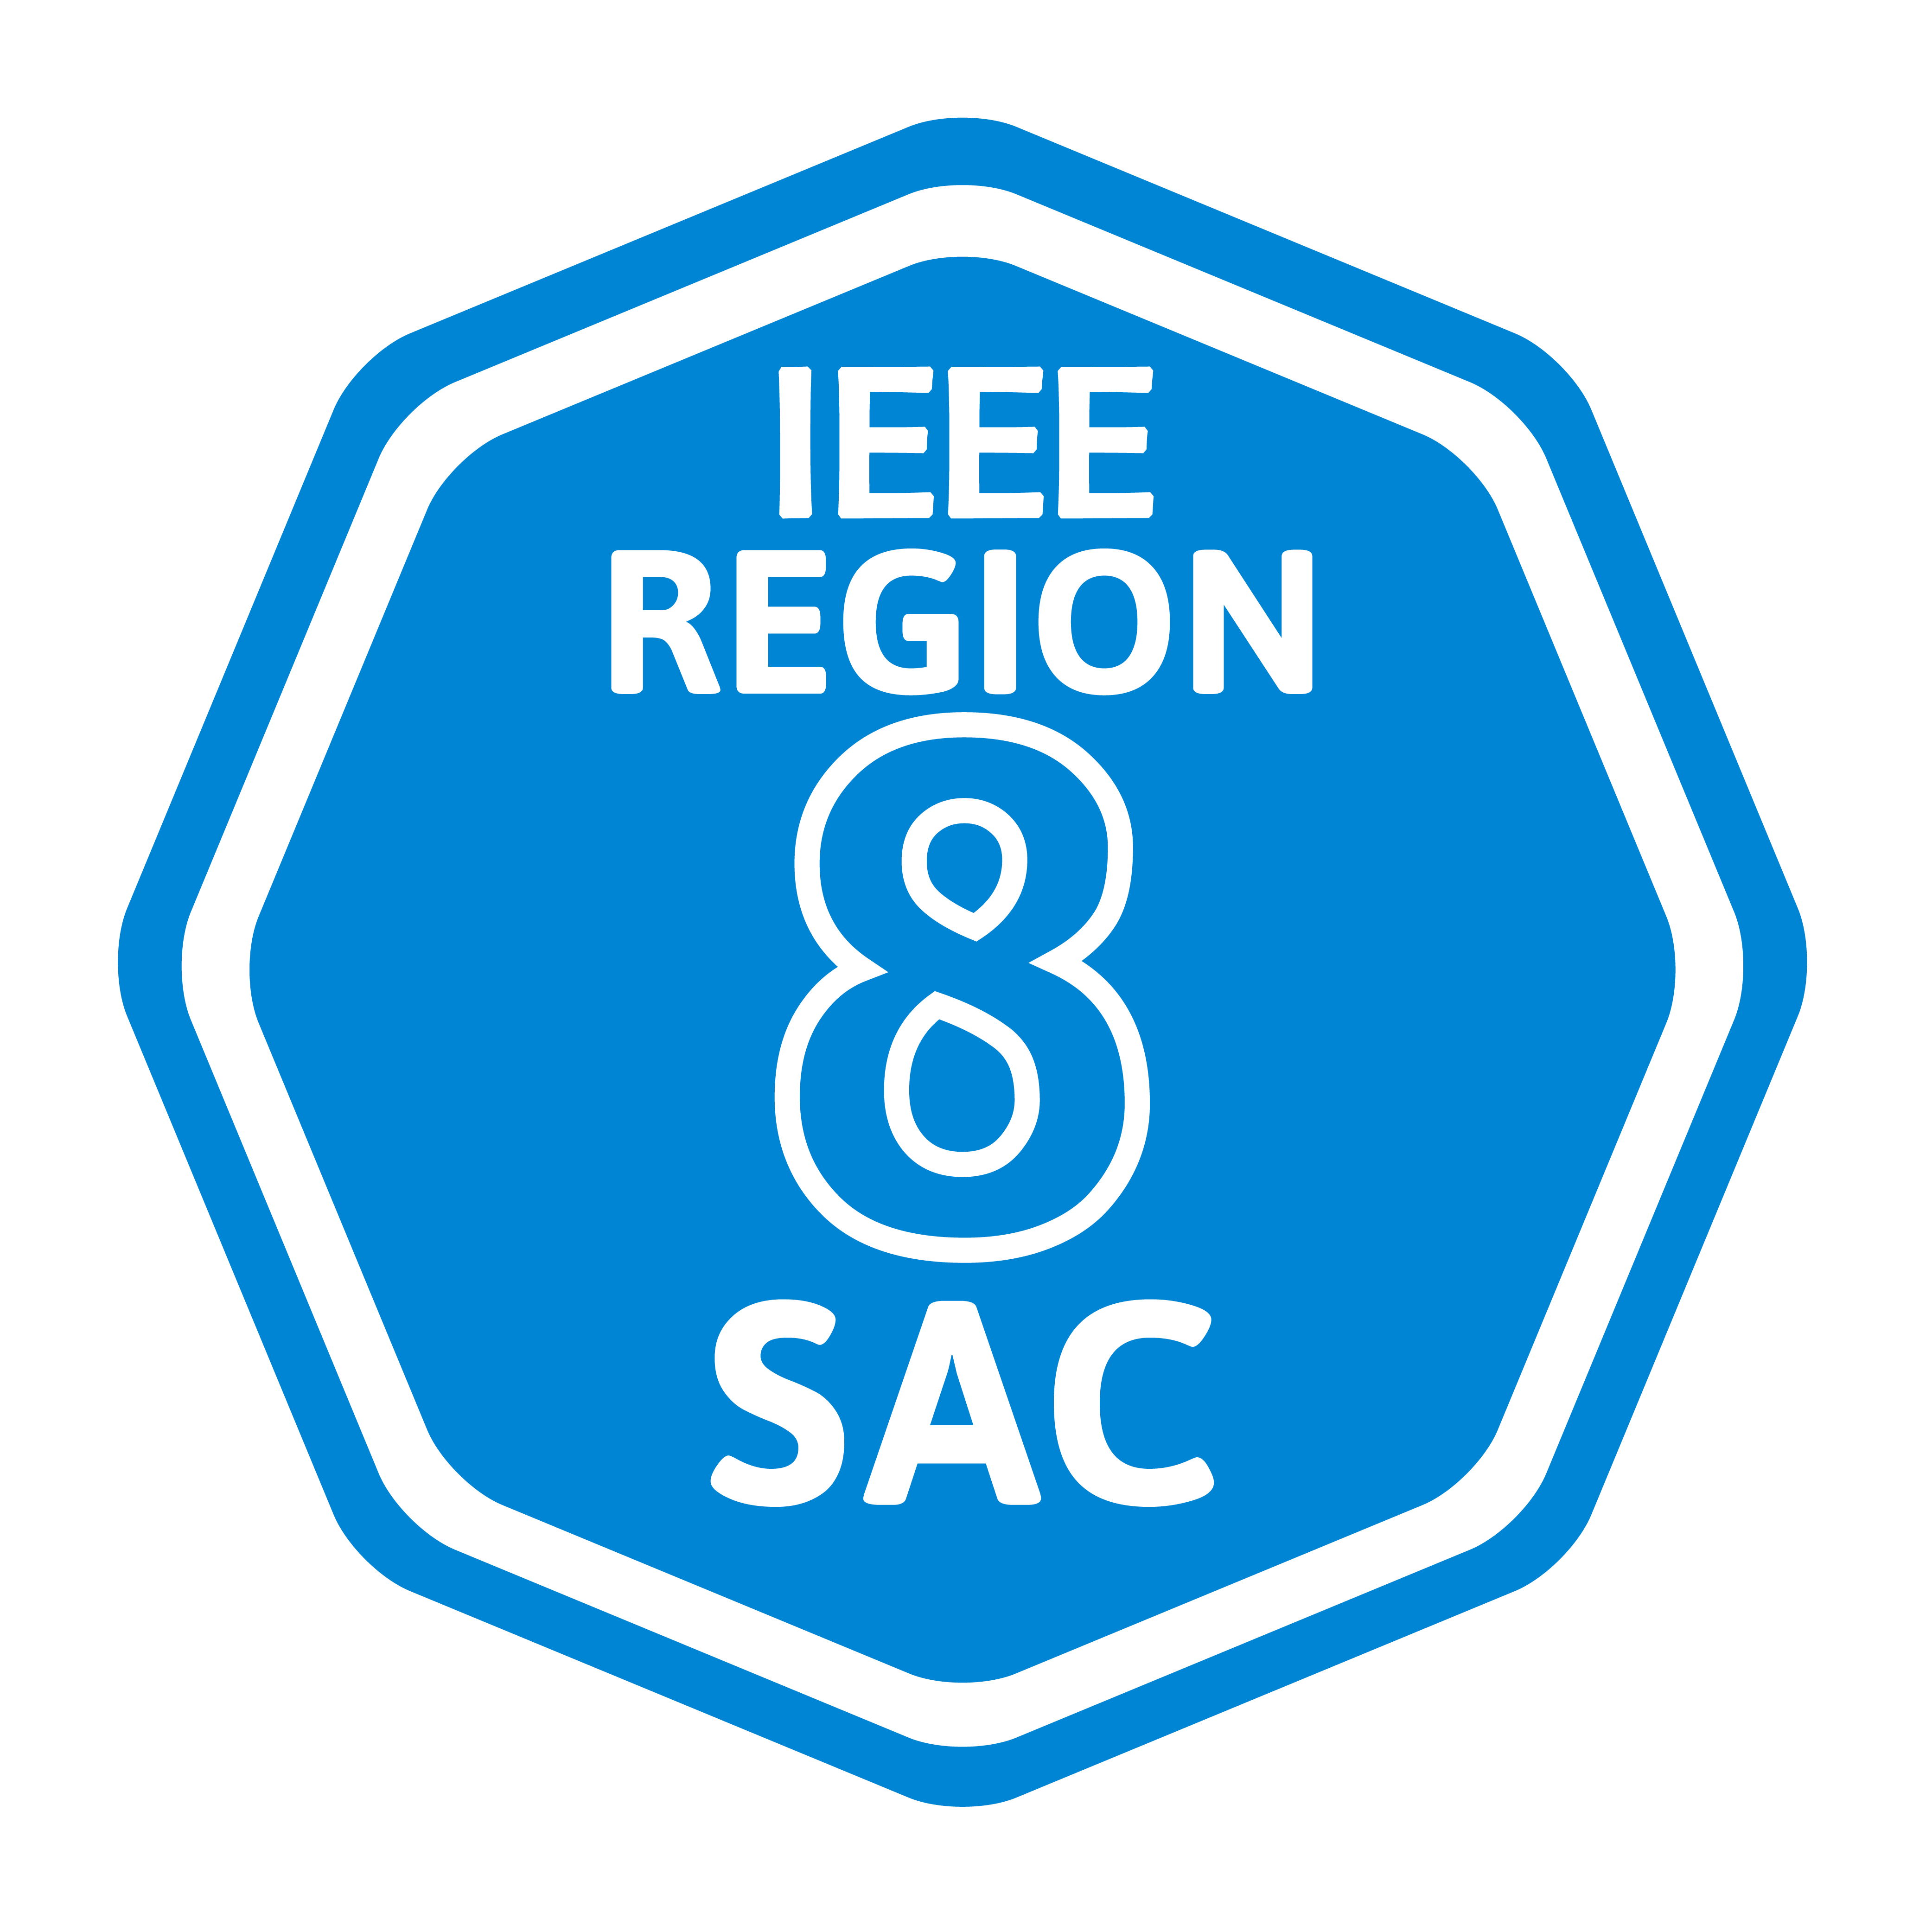 Sac лого. IEEE. 8 Регион. Sac PNG logo. Region 8